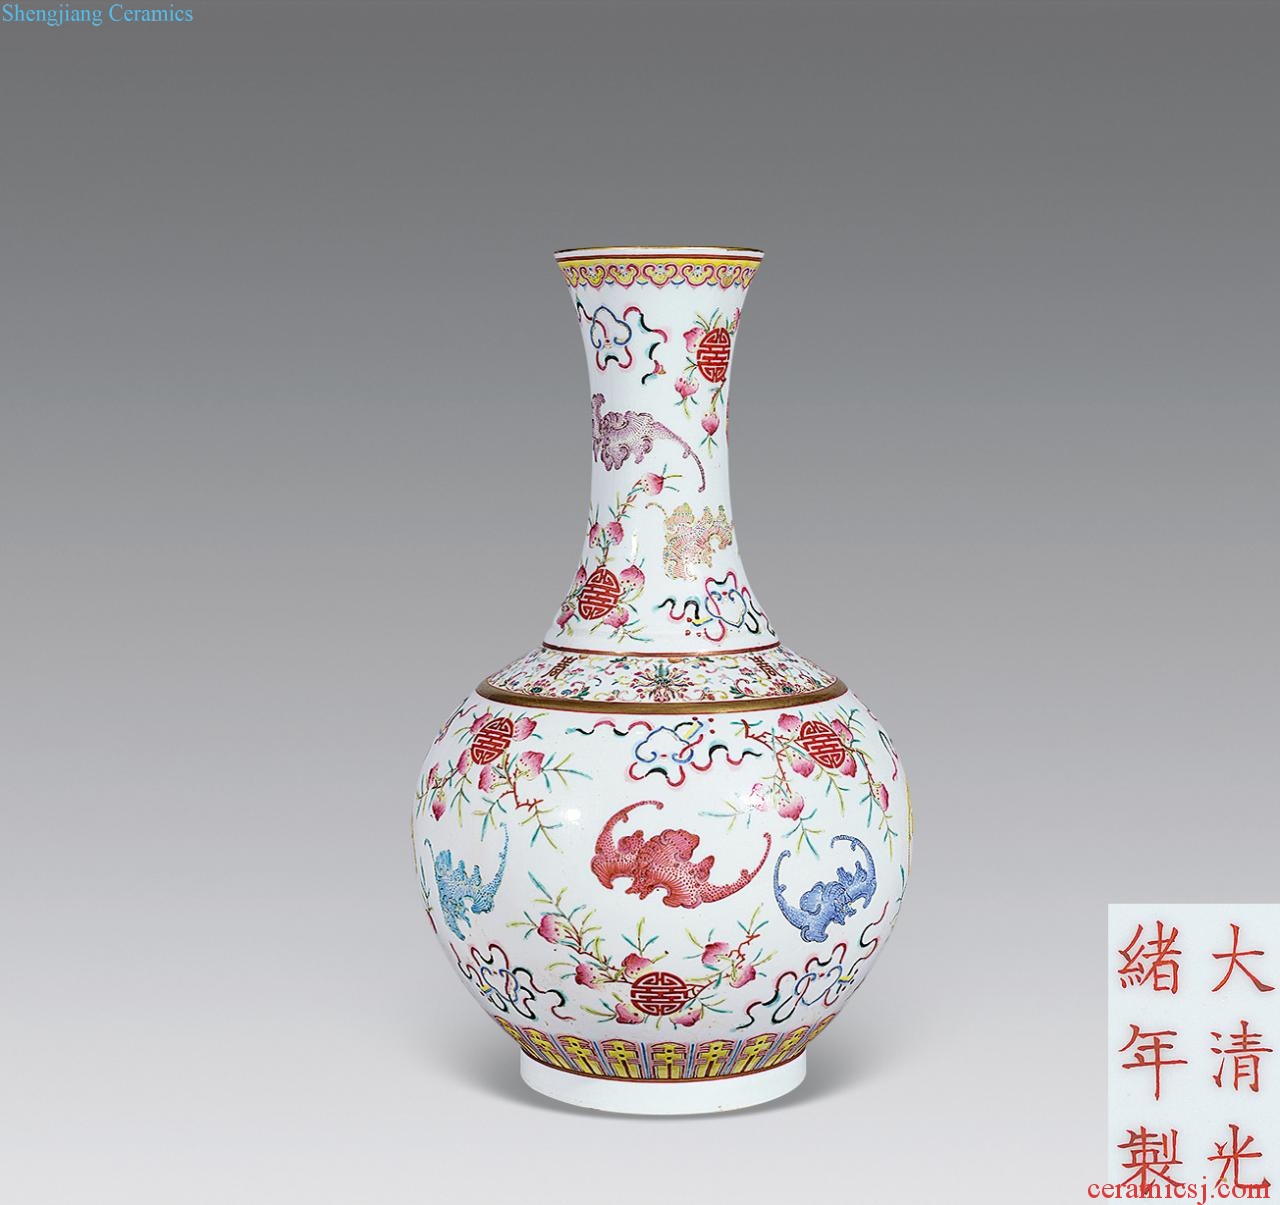 Pastel reign of qing emperor guangxu was 1 bottle